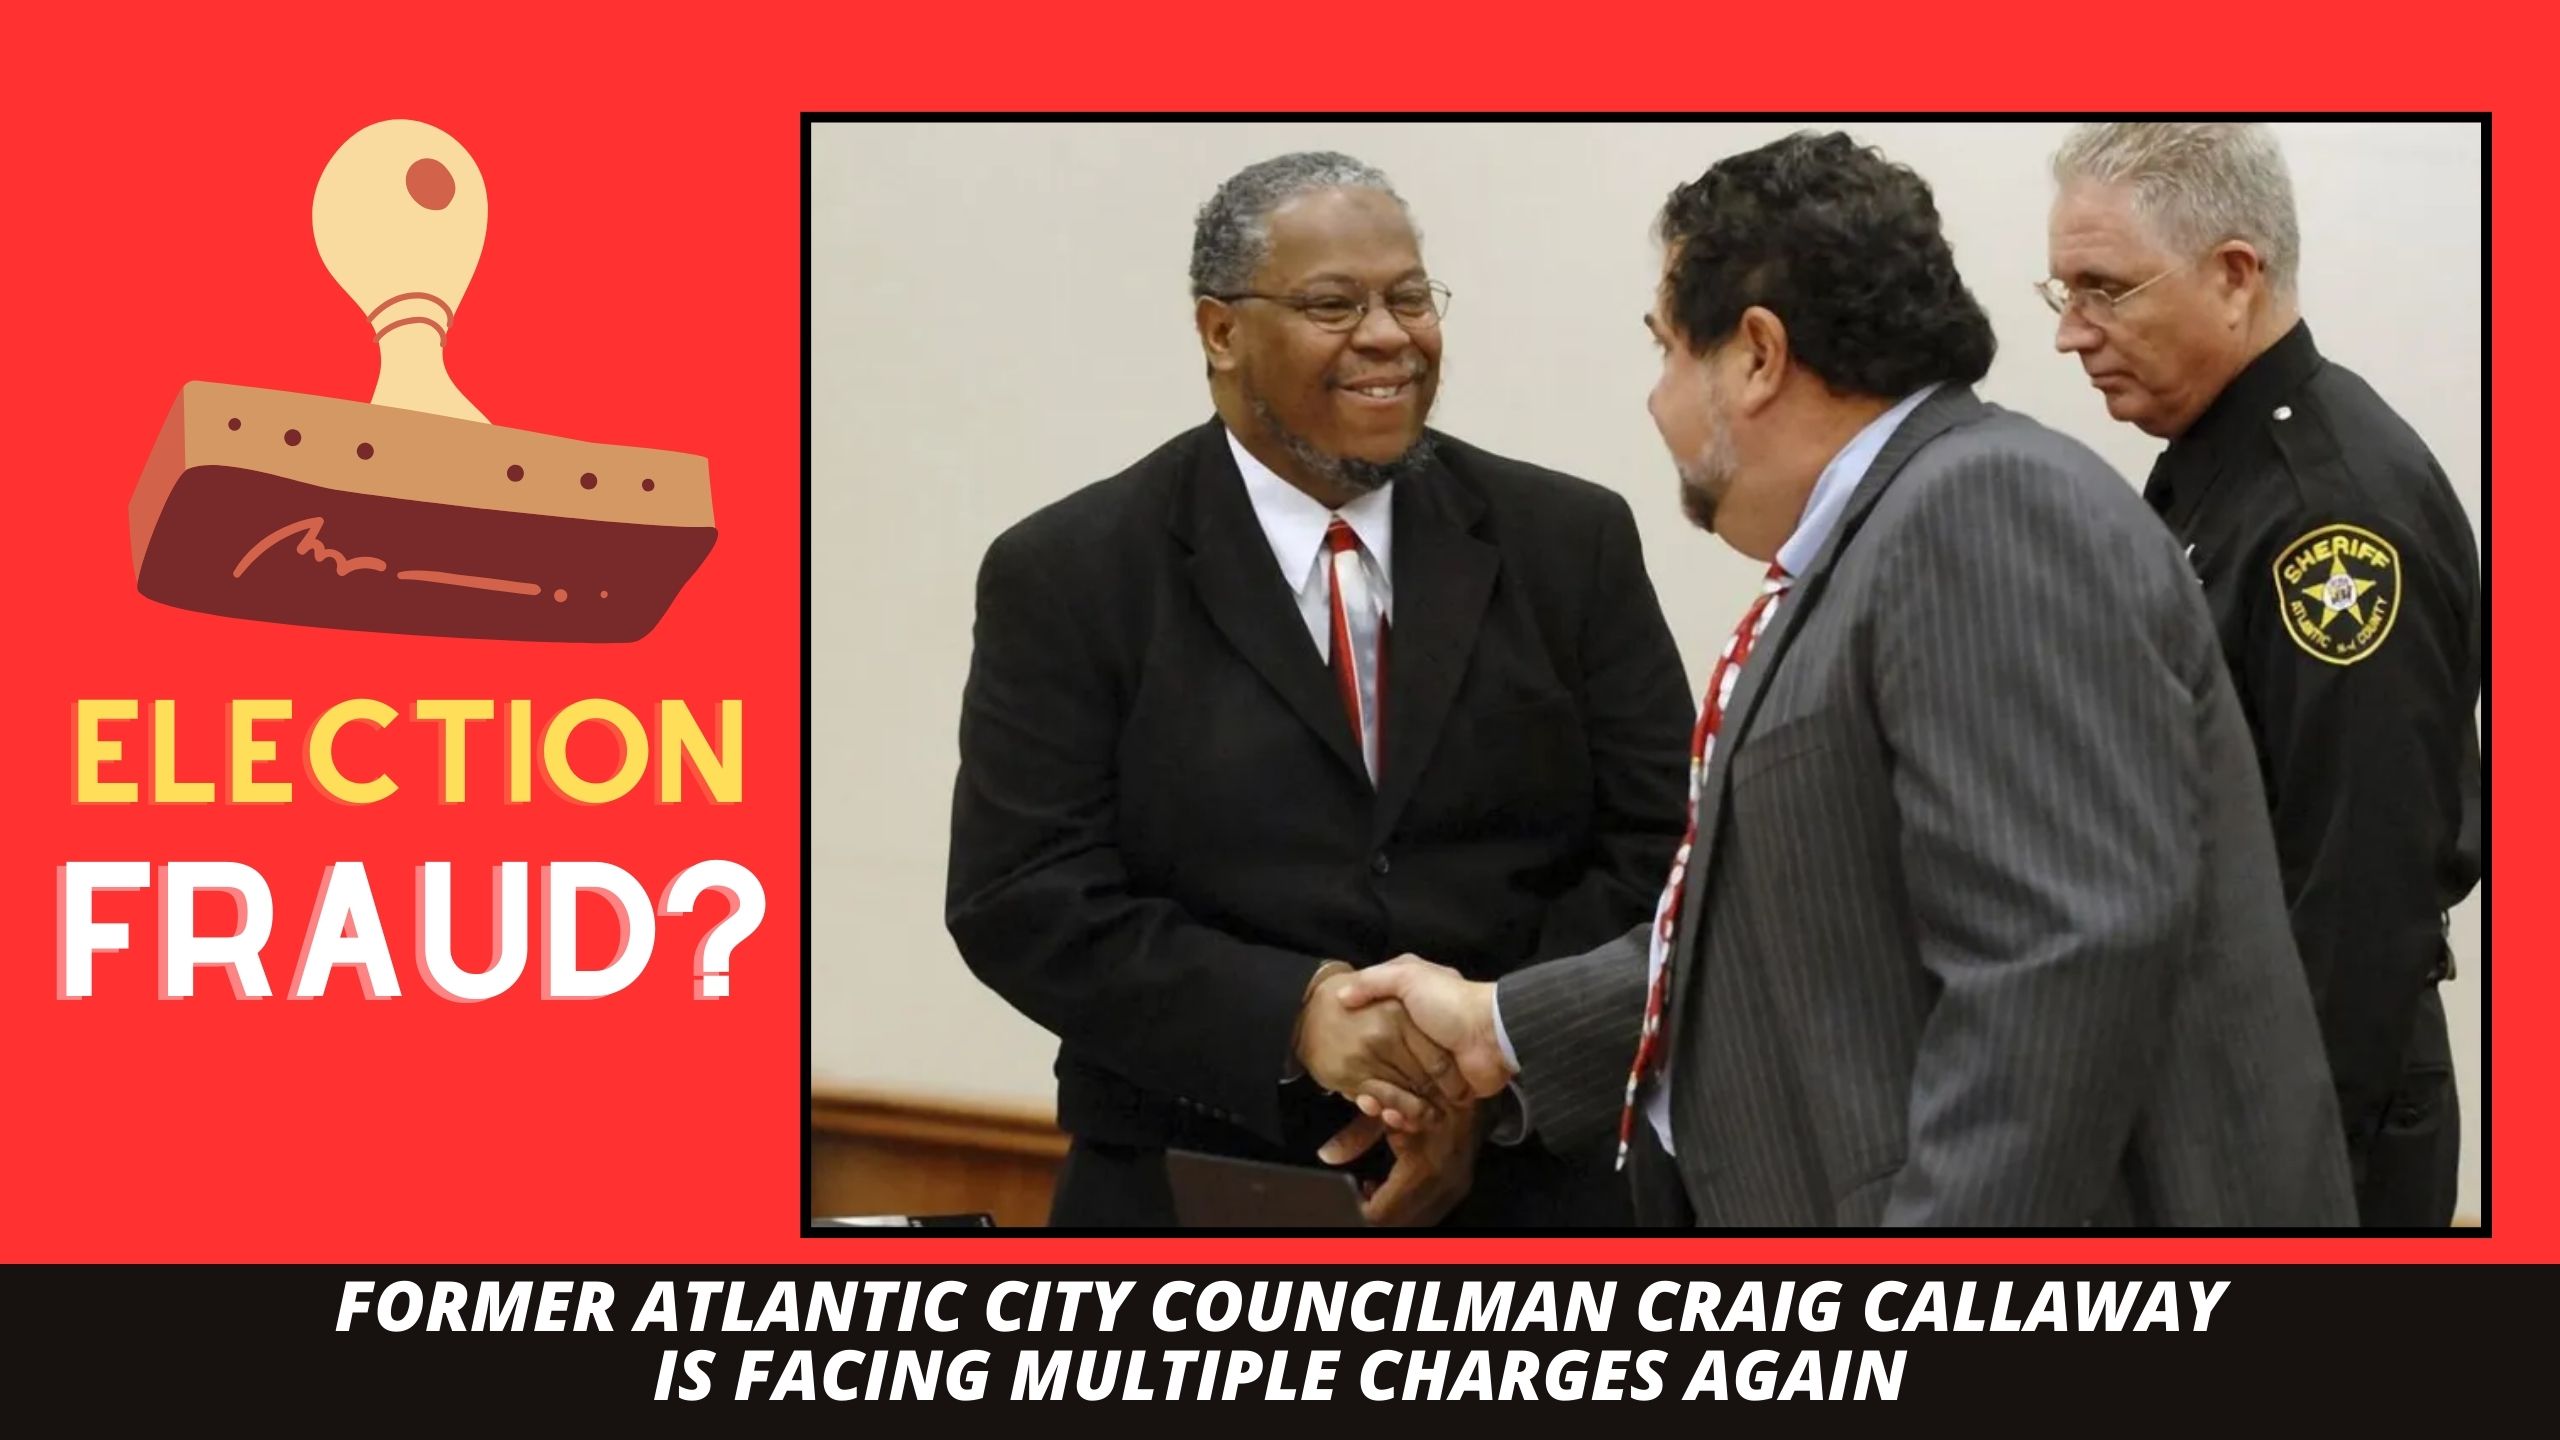 Former Atlantic City Councilman Craig Callaway is facing multiple charges again (Photo: Google/Canva/Rachelle J)